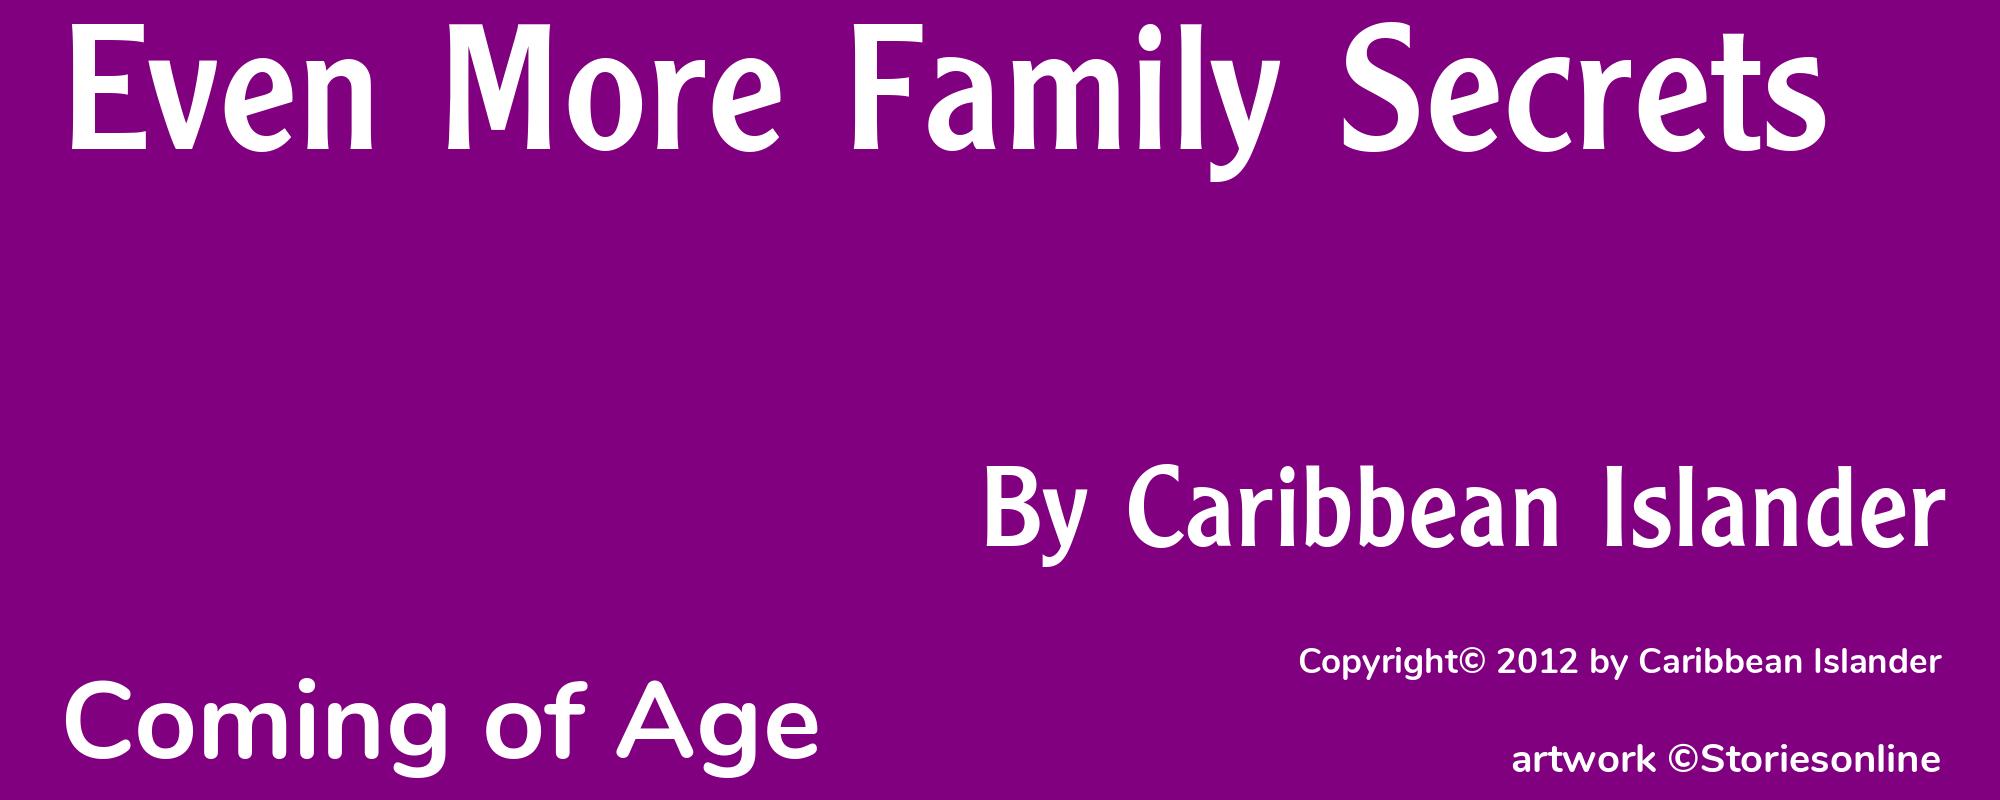 Even More Family Secrets - Cover